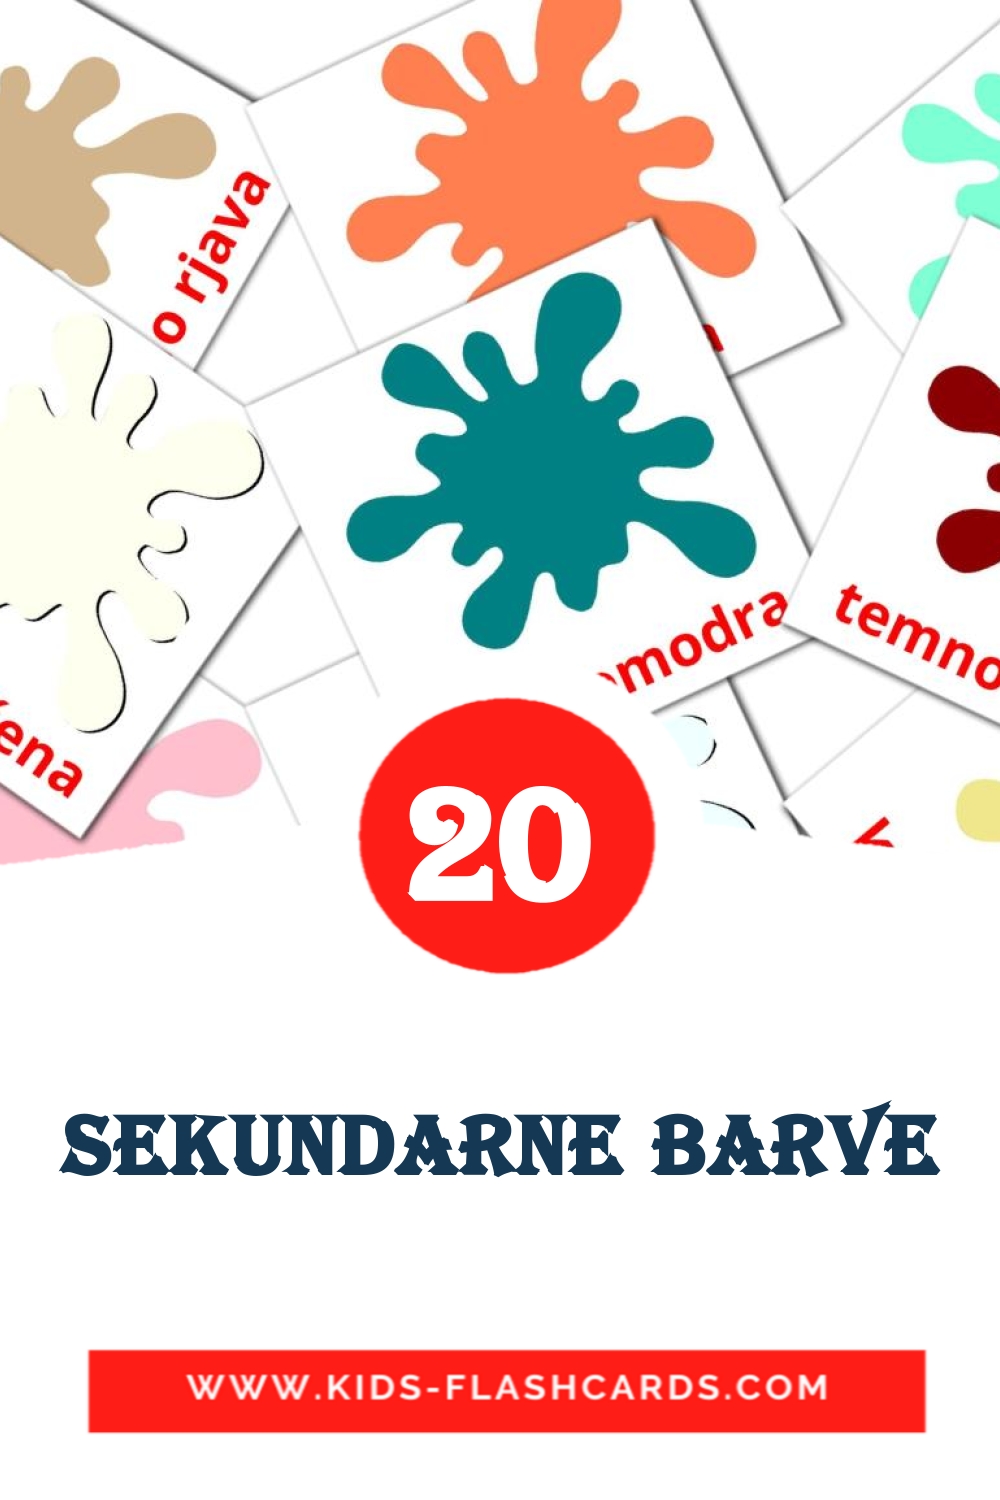 20 carte illustrate di Sekundarne barve per la scuola materna in sloveno